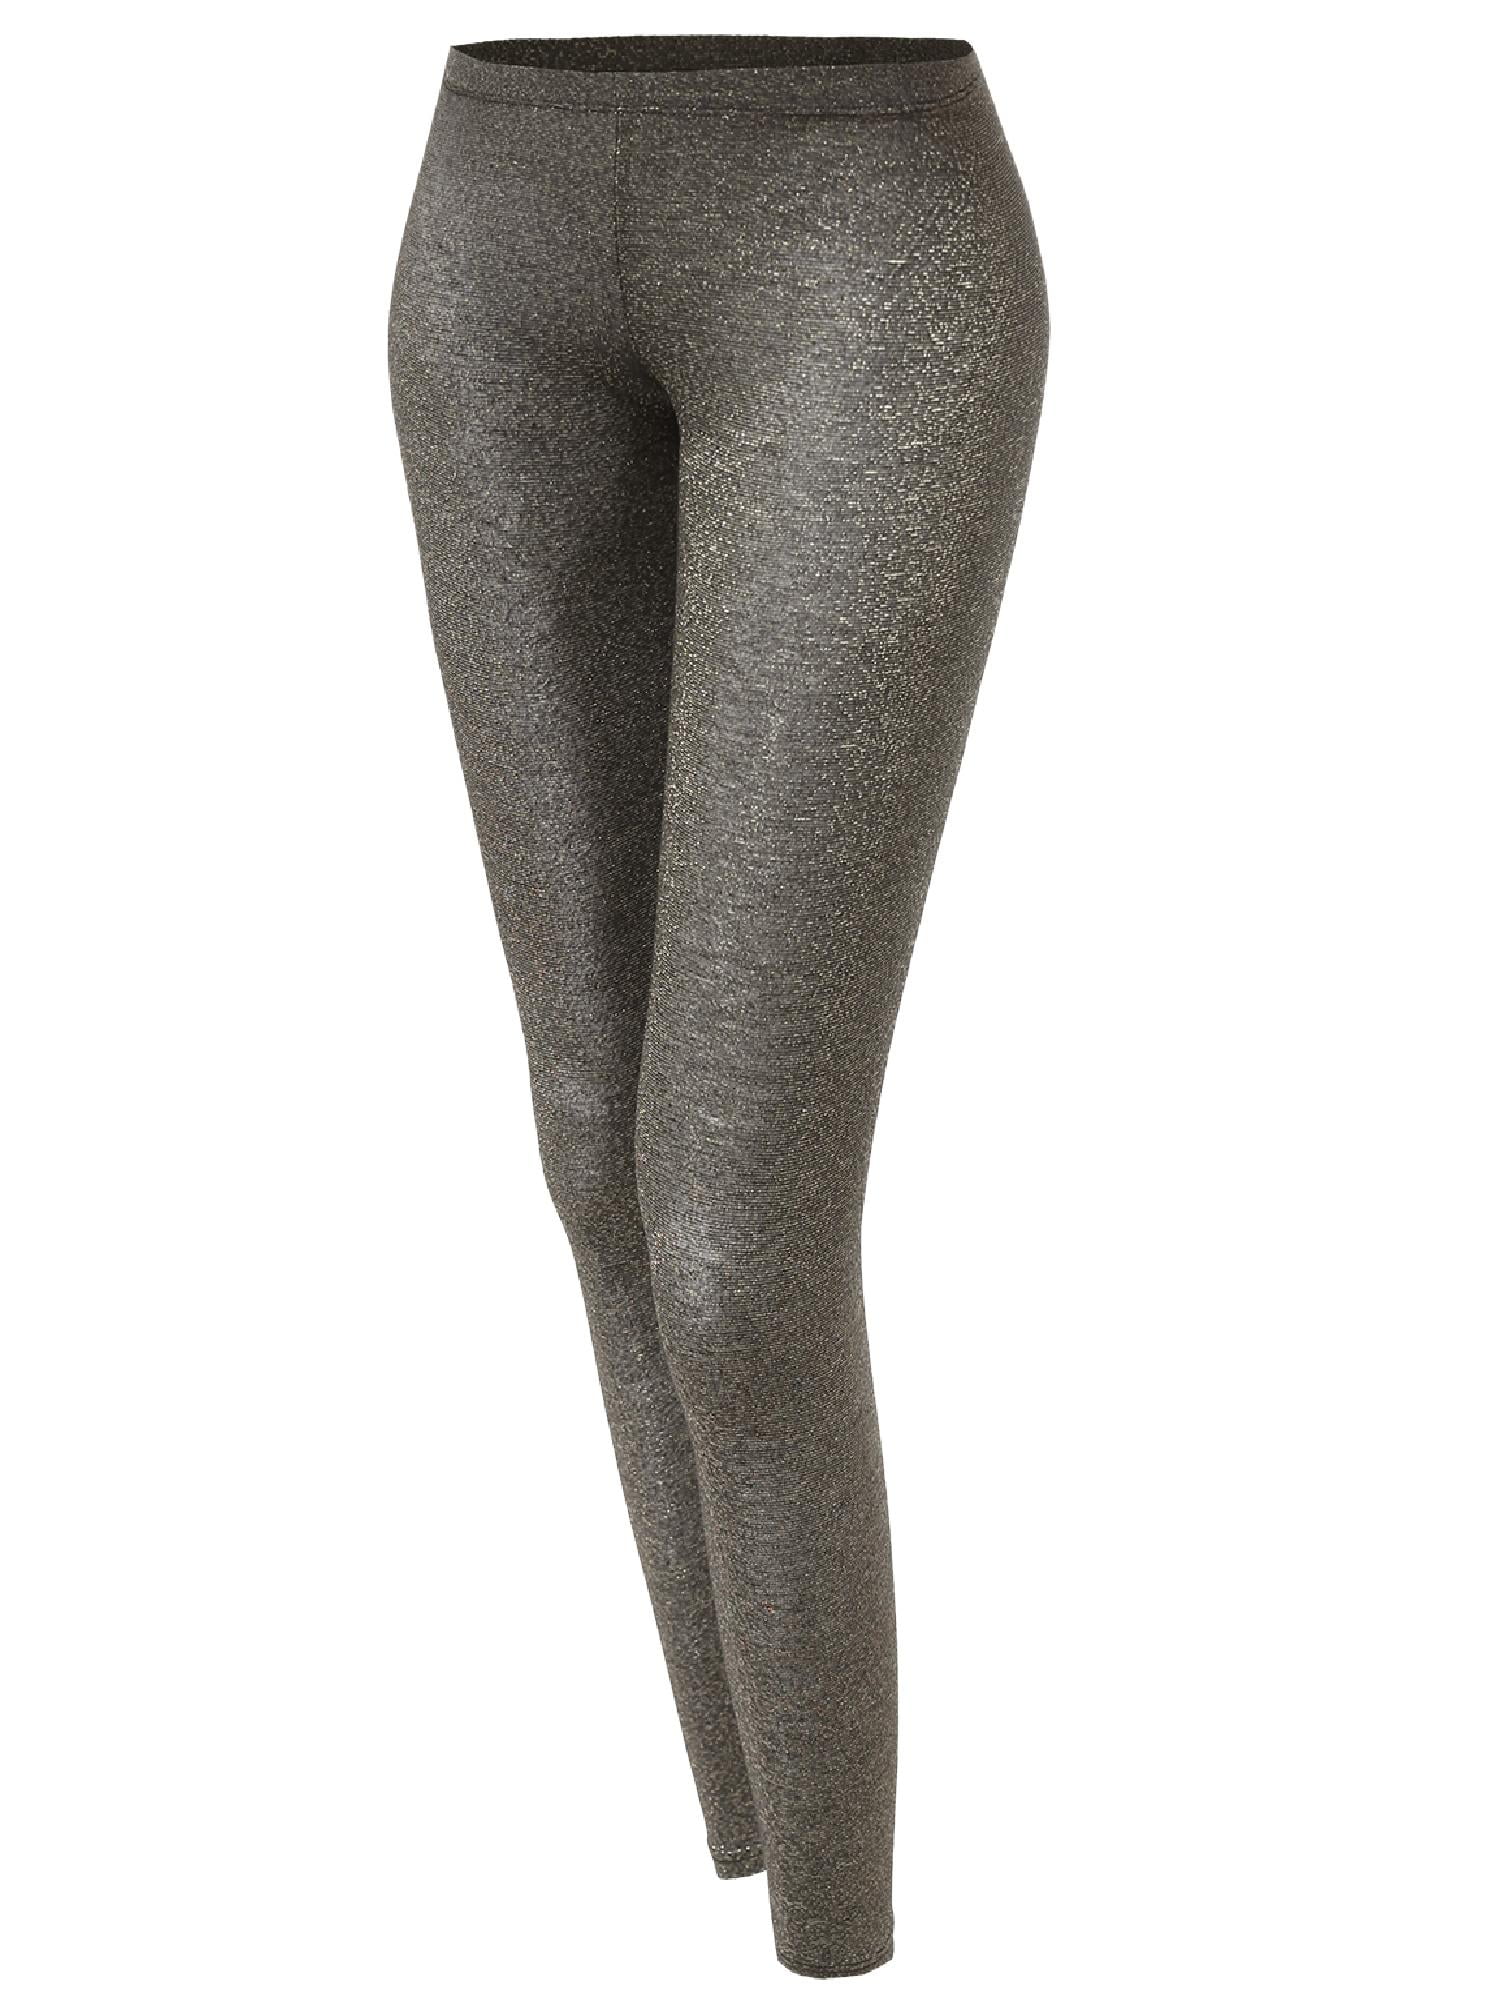 FashionOutfit Women's Basic Glittery Metallic Leggings - Walmart.com